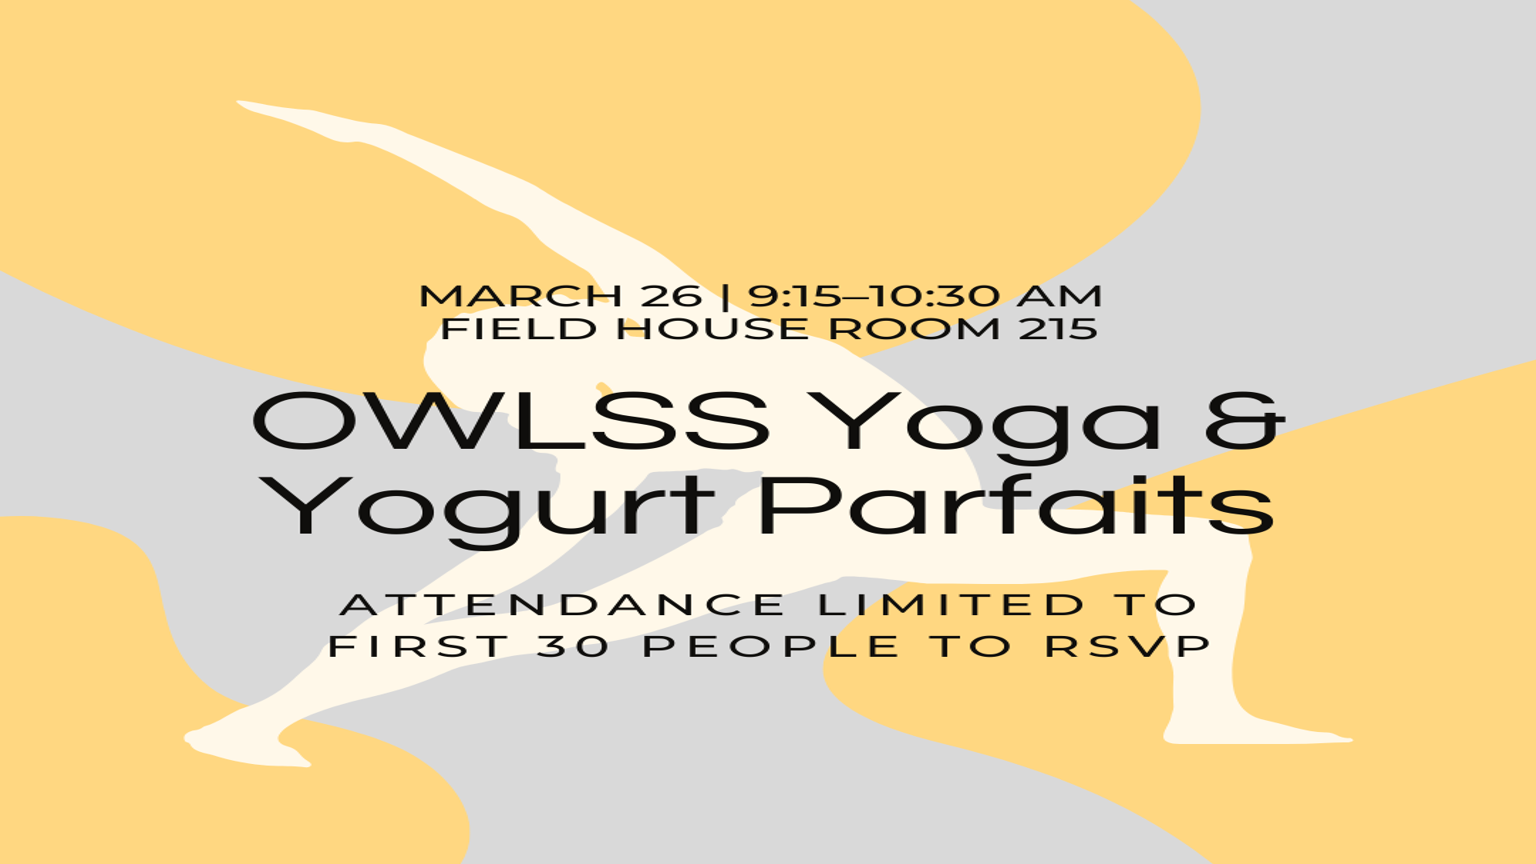 OWLSS Yoga and Yogurt Parfaits